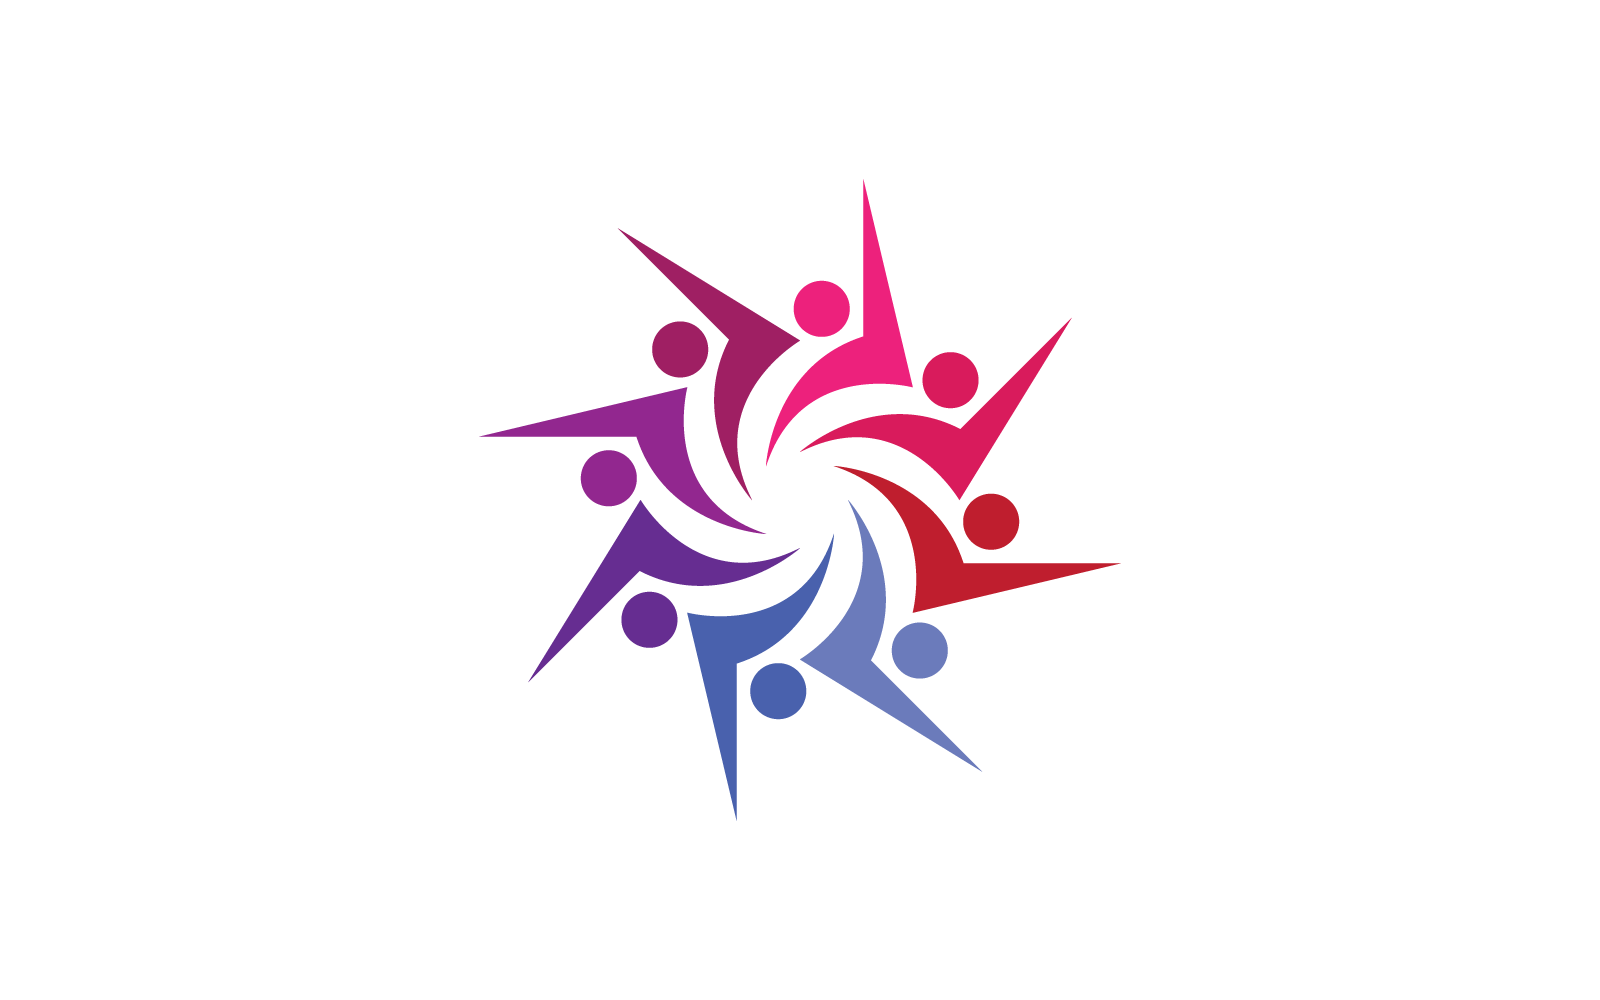 Community, network and social design logo illustration template